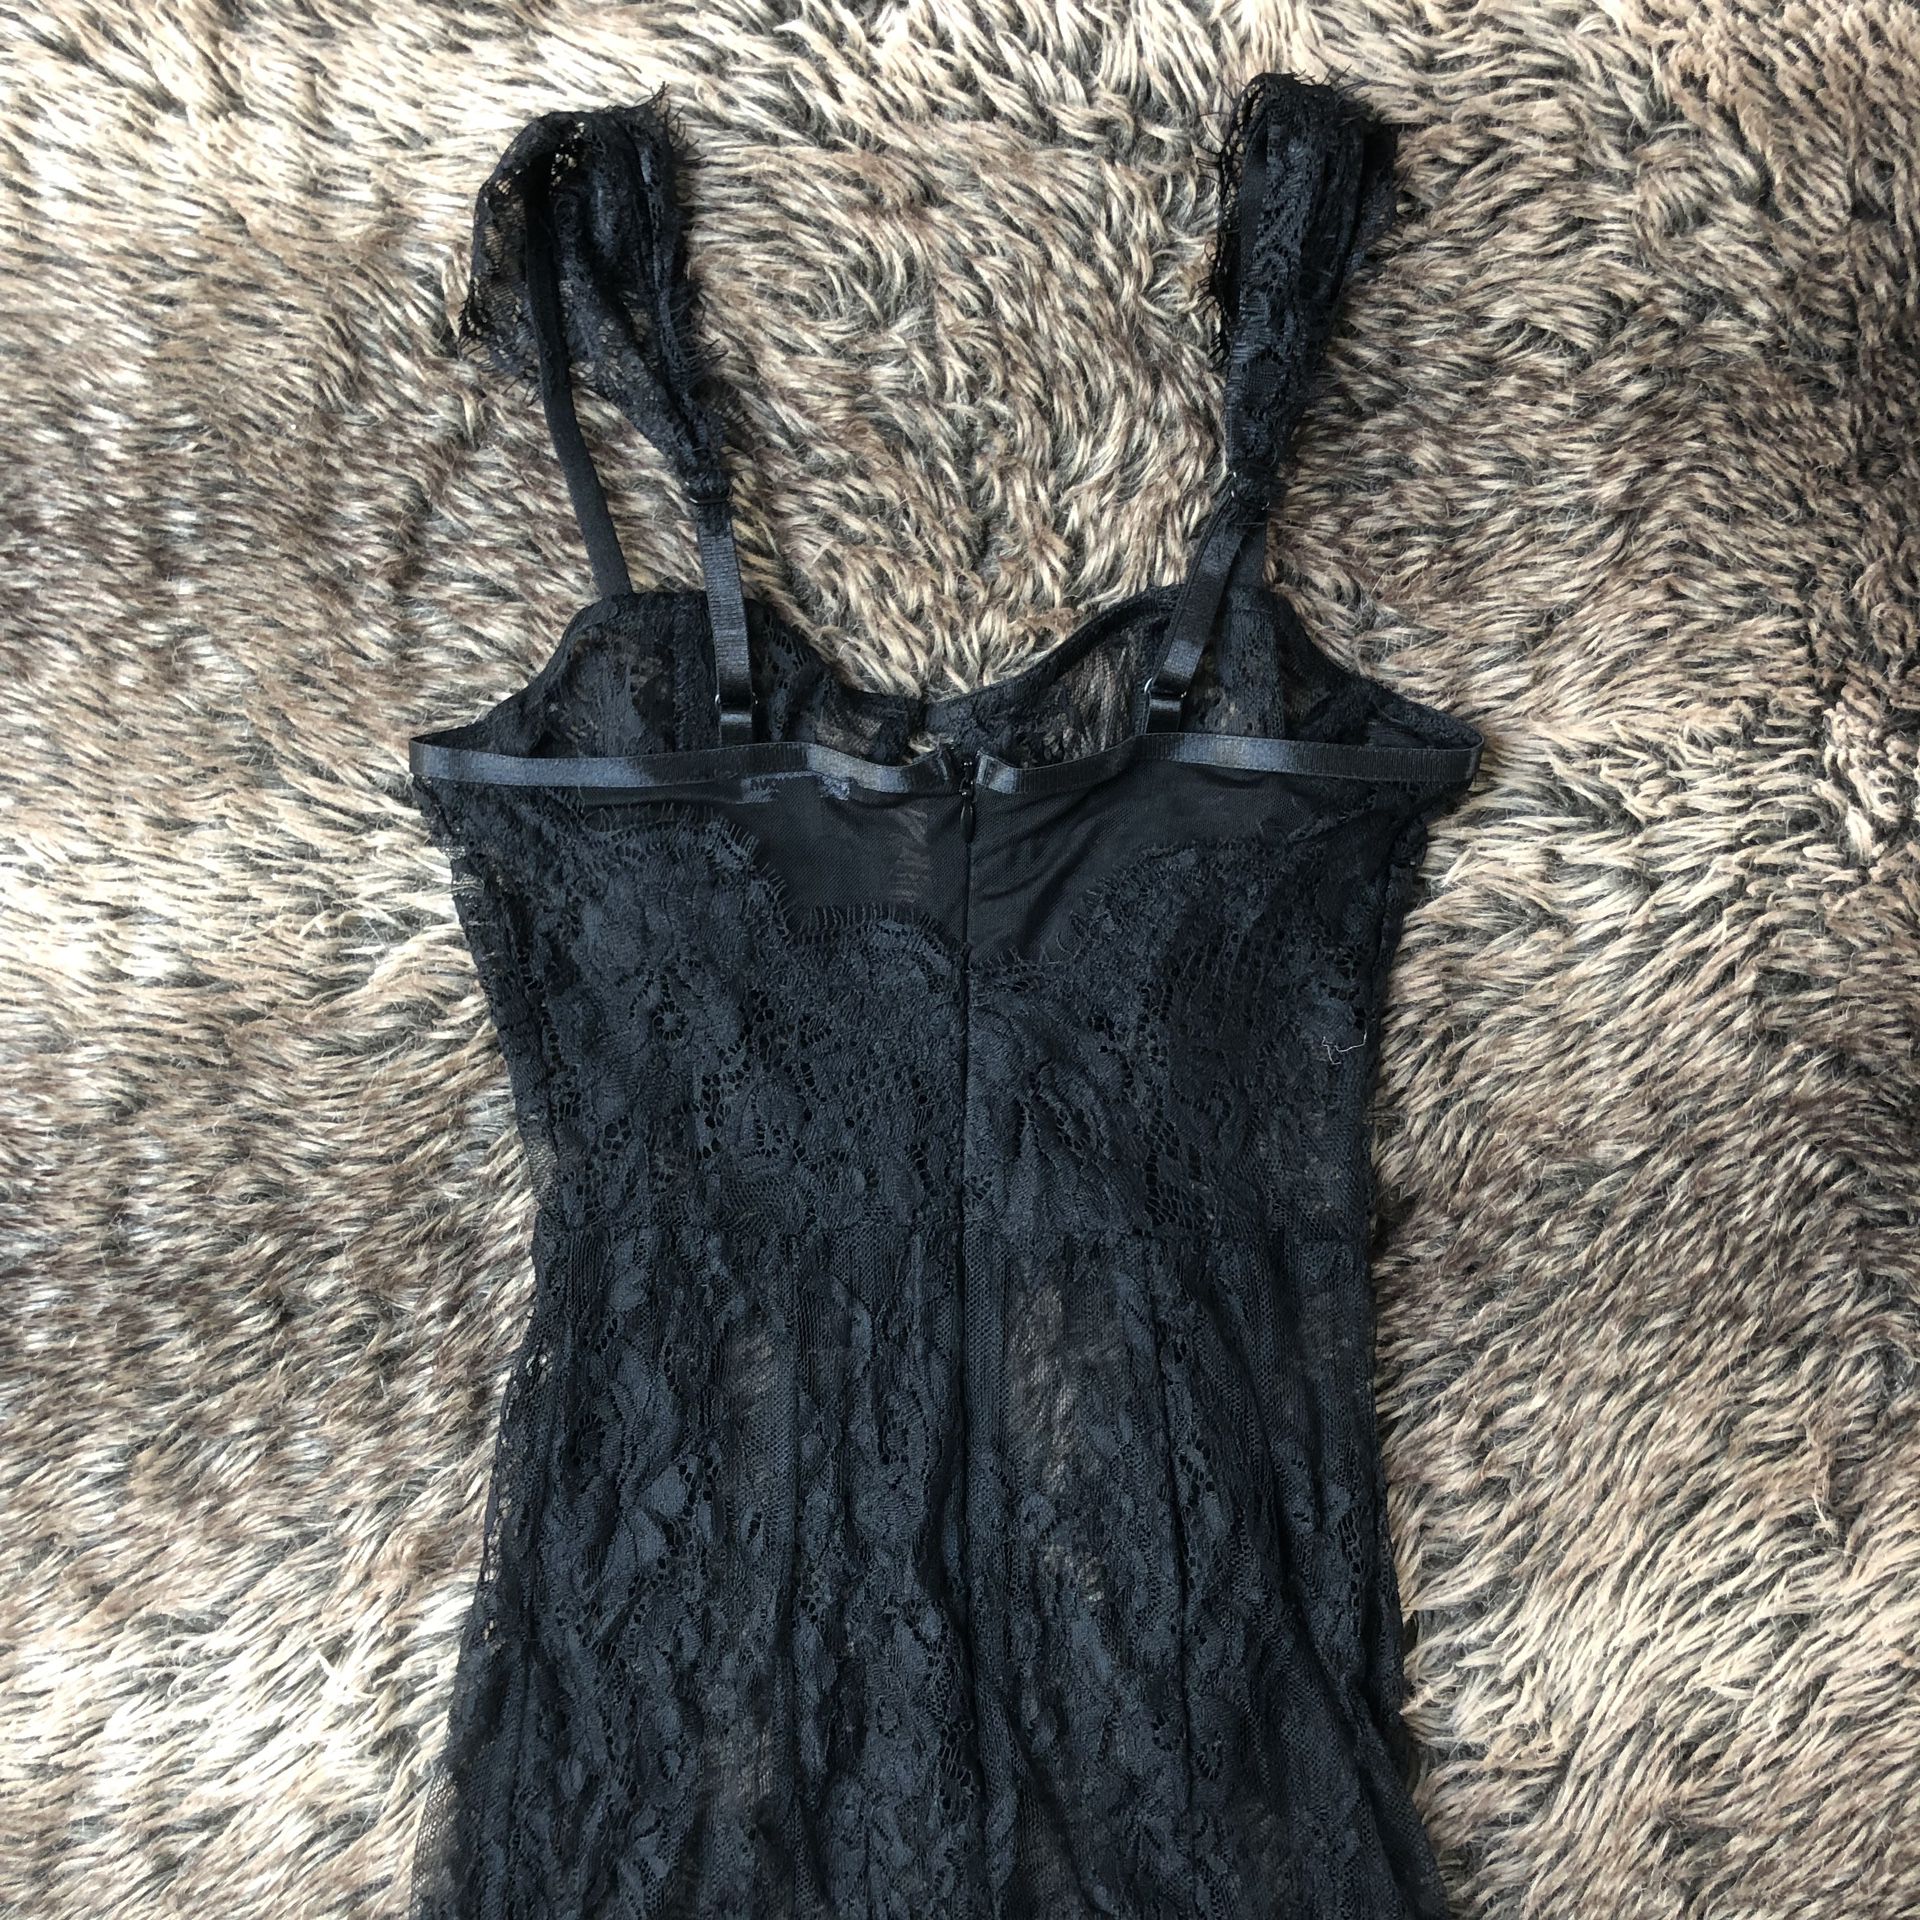 Fashion Nova Black Lace Dress for Sale in Medford, MA - OfferUp